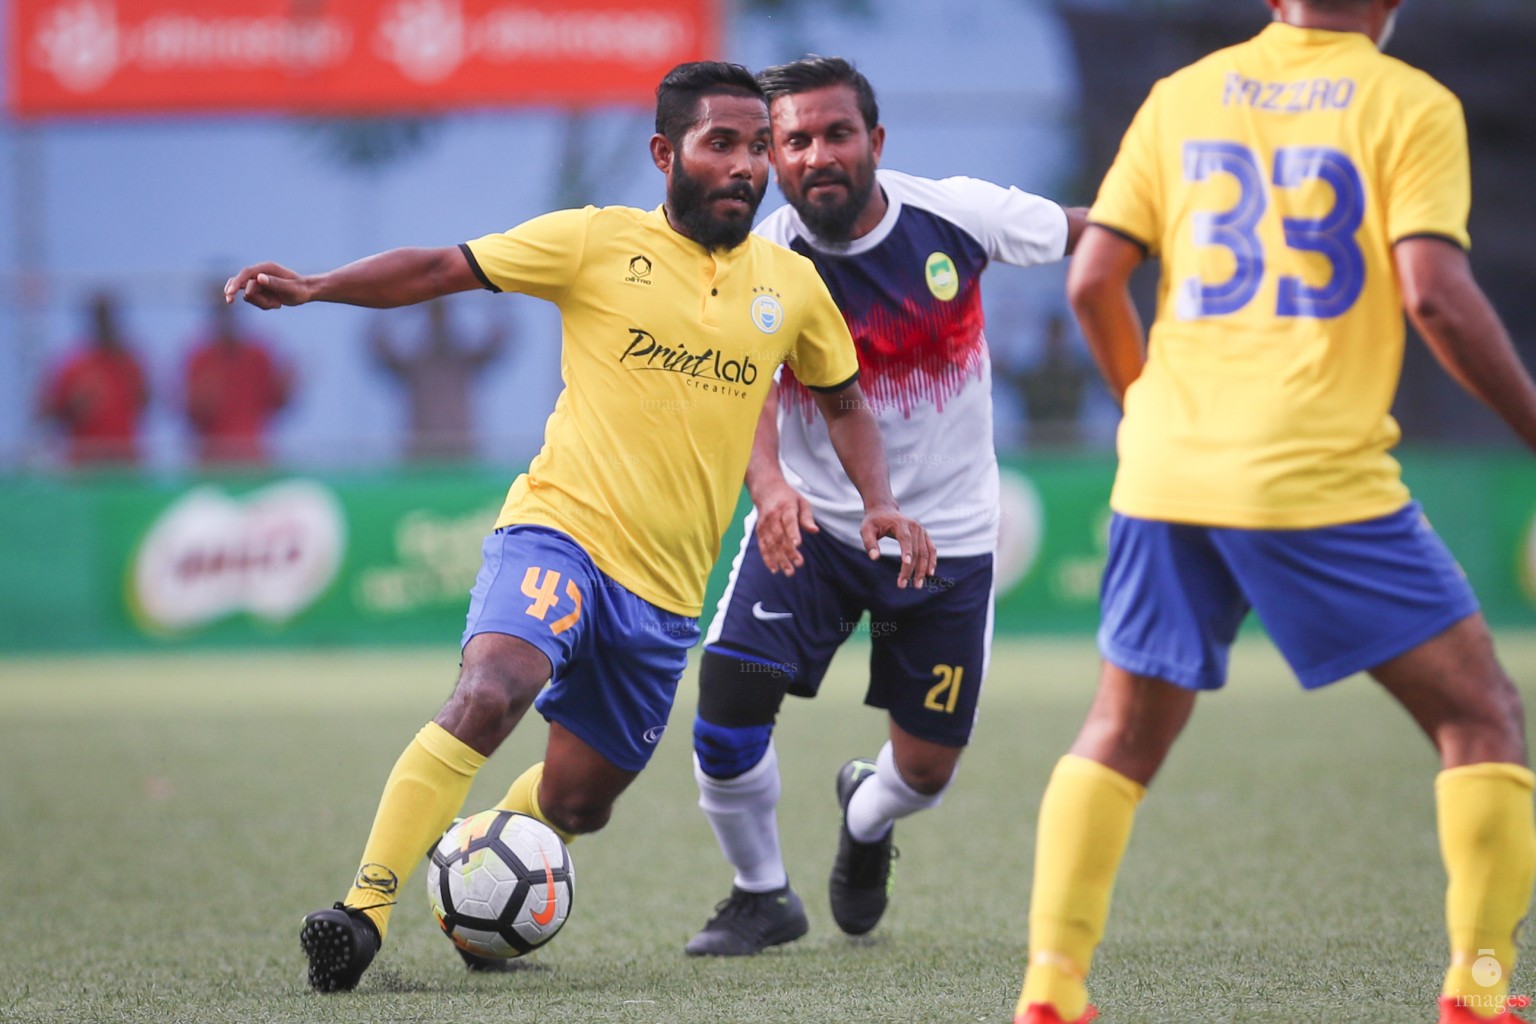 Ramazan Veterans Cup 2018 / Club Valencia vs Maziya SR)